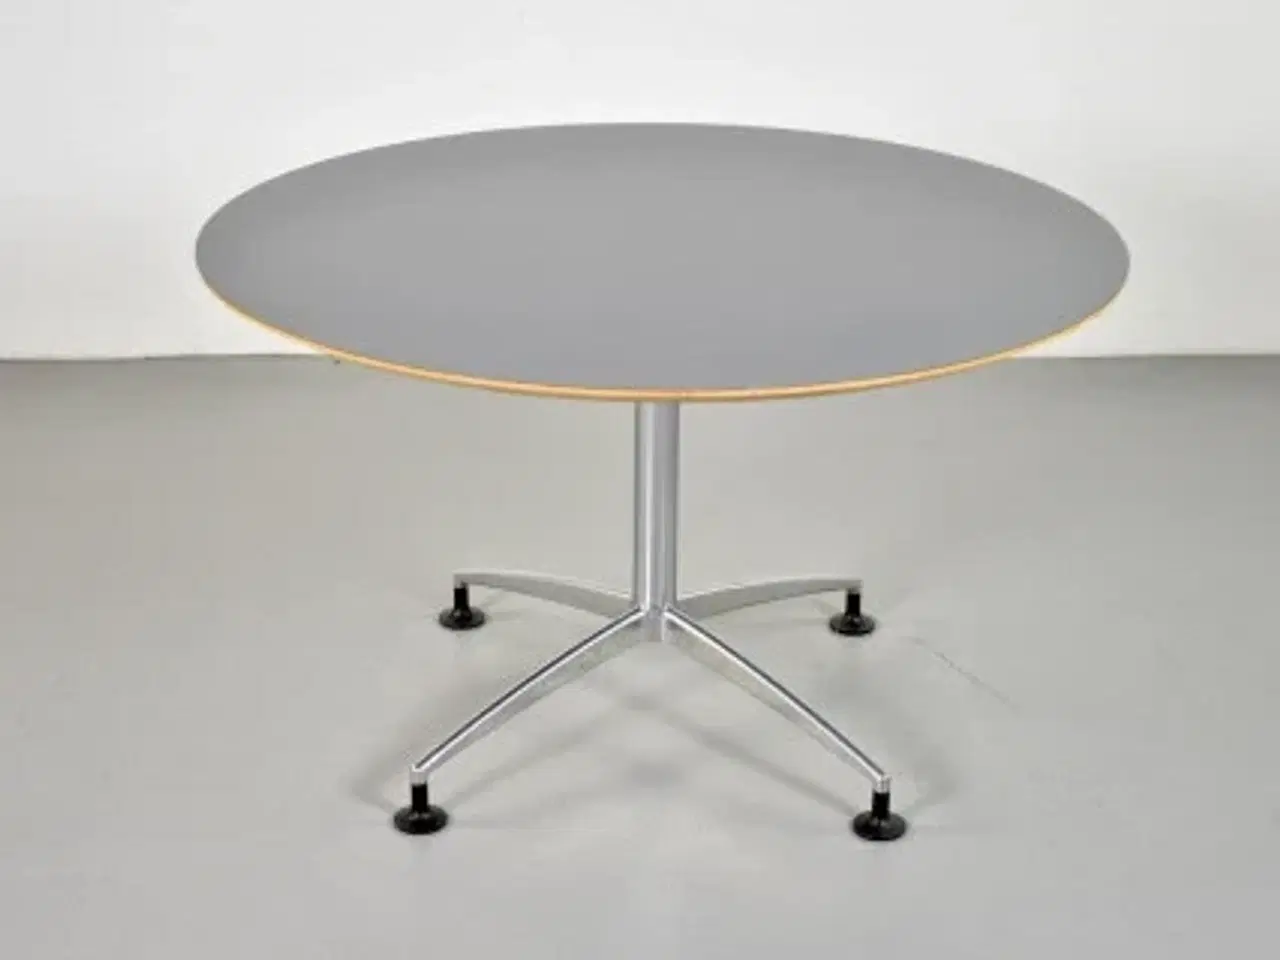 Billede 1 - Rundt cafébord med grå laminat og filt på undersiden